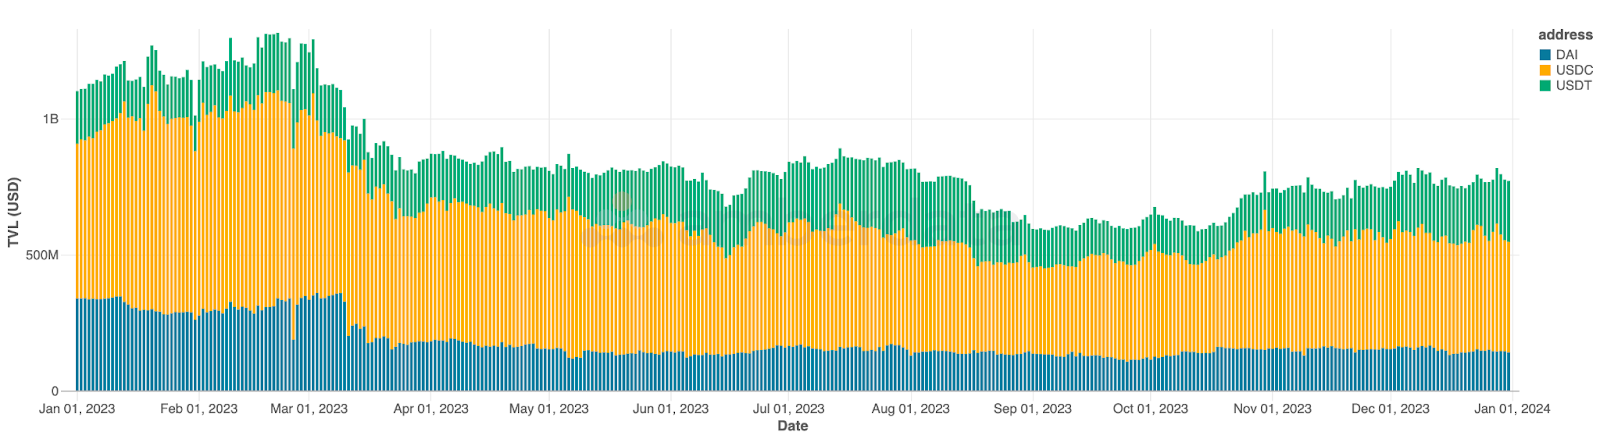 Amberdata API Overall TVL on DEXs for USDC, USDT, and DAI over 2023